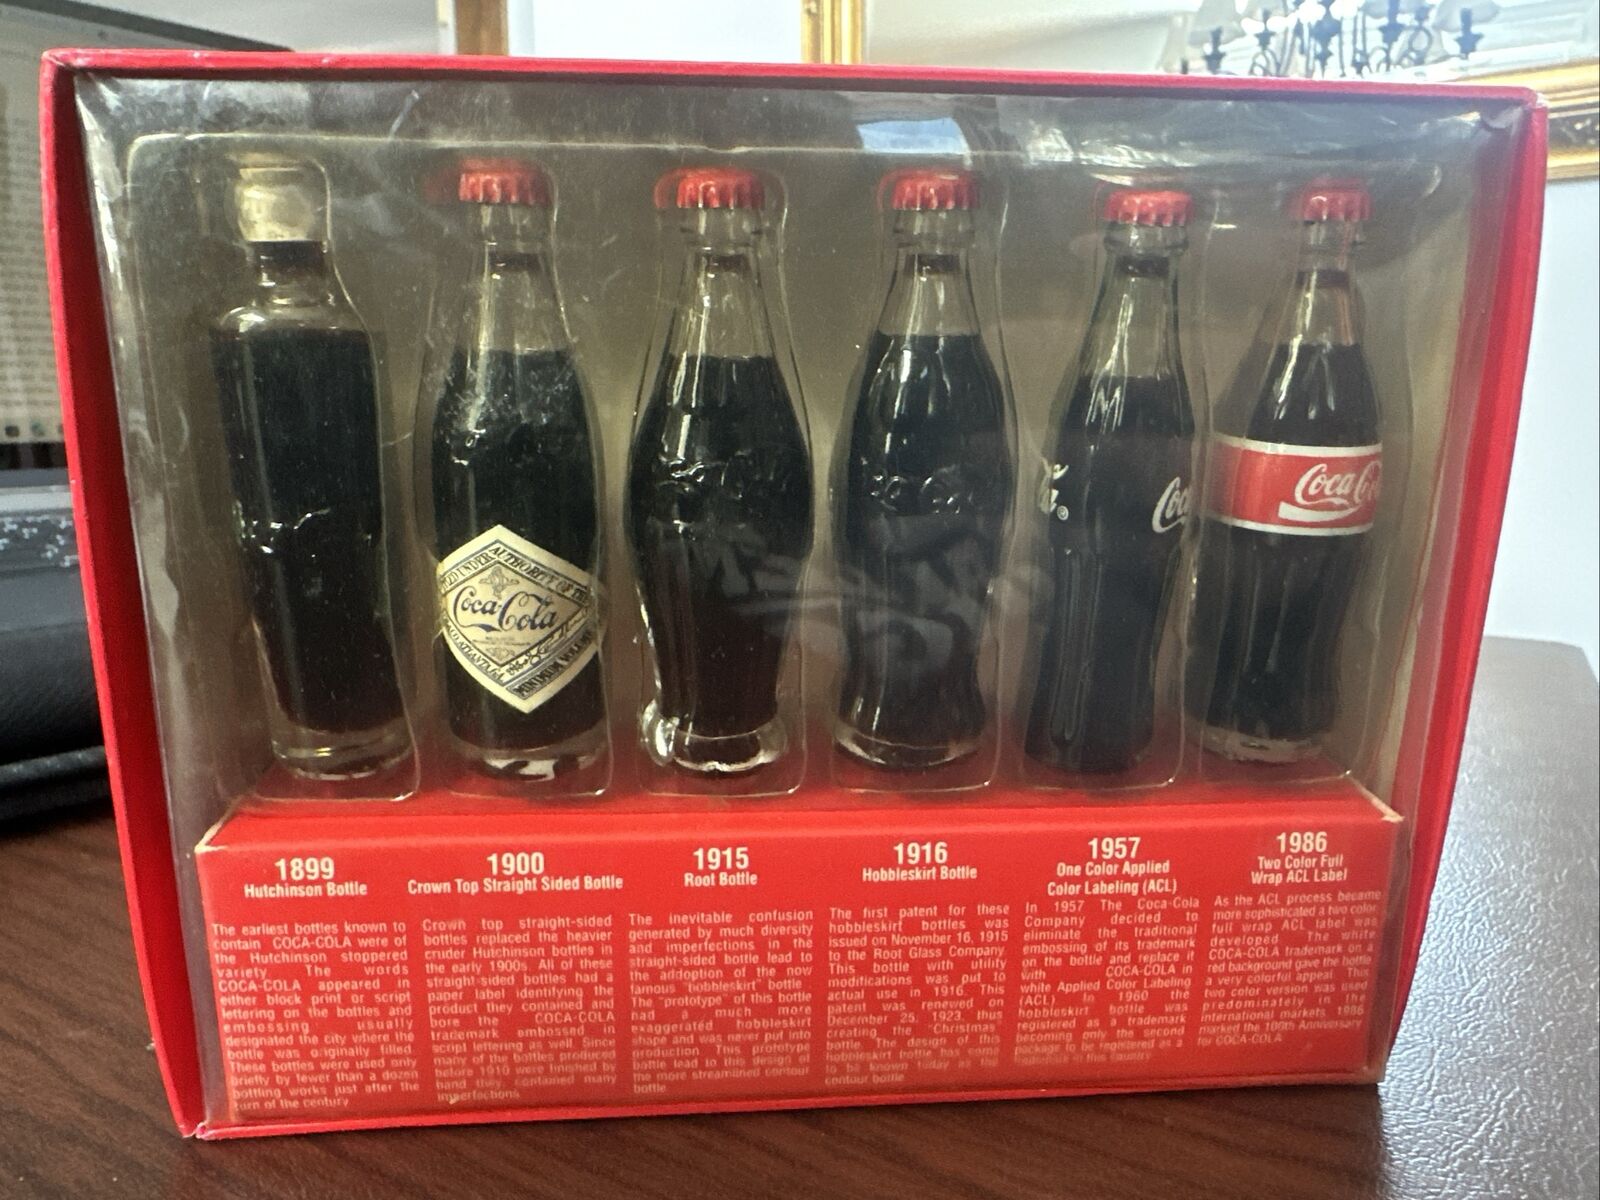 Evolution of the Coco Cola Contour Bottle - Minor Box Wear - Bottles Unopened